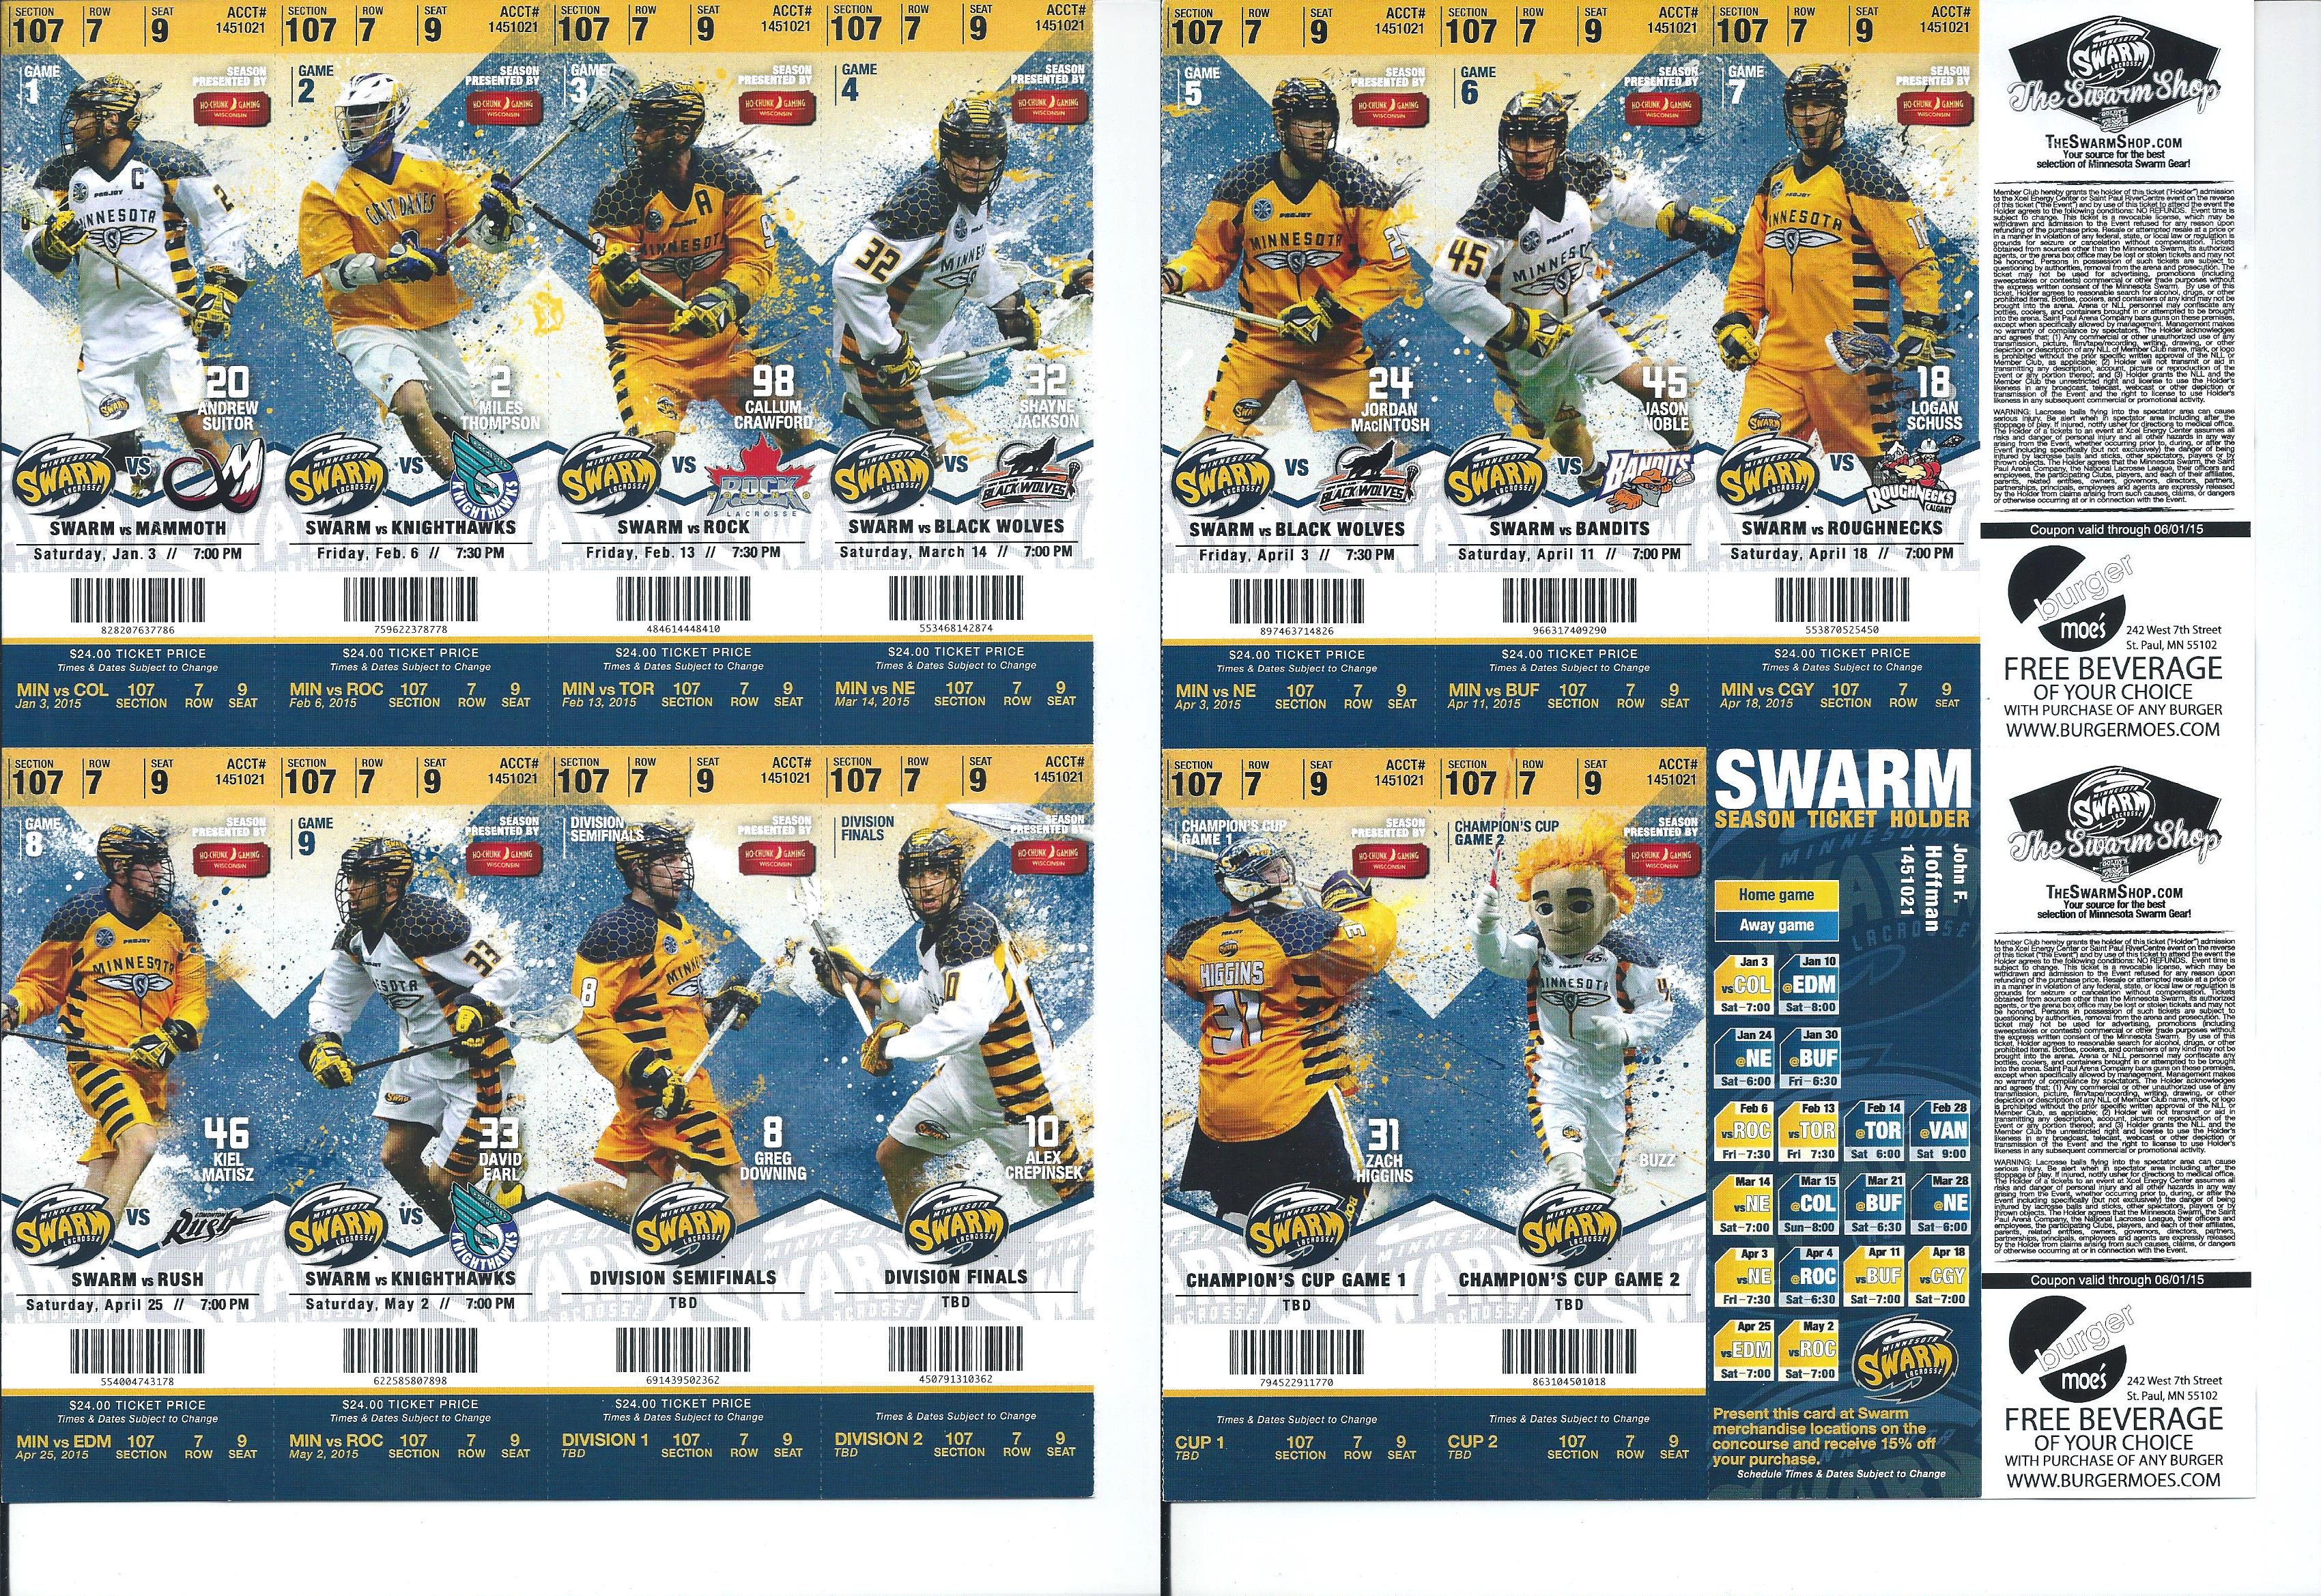 2015 Swarm Season Tickets